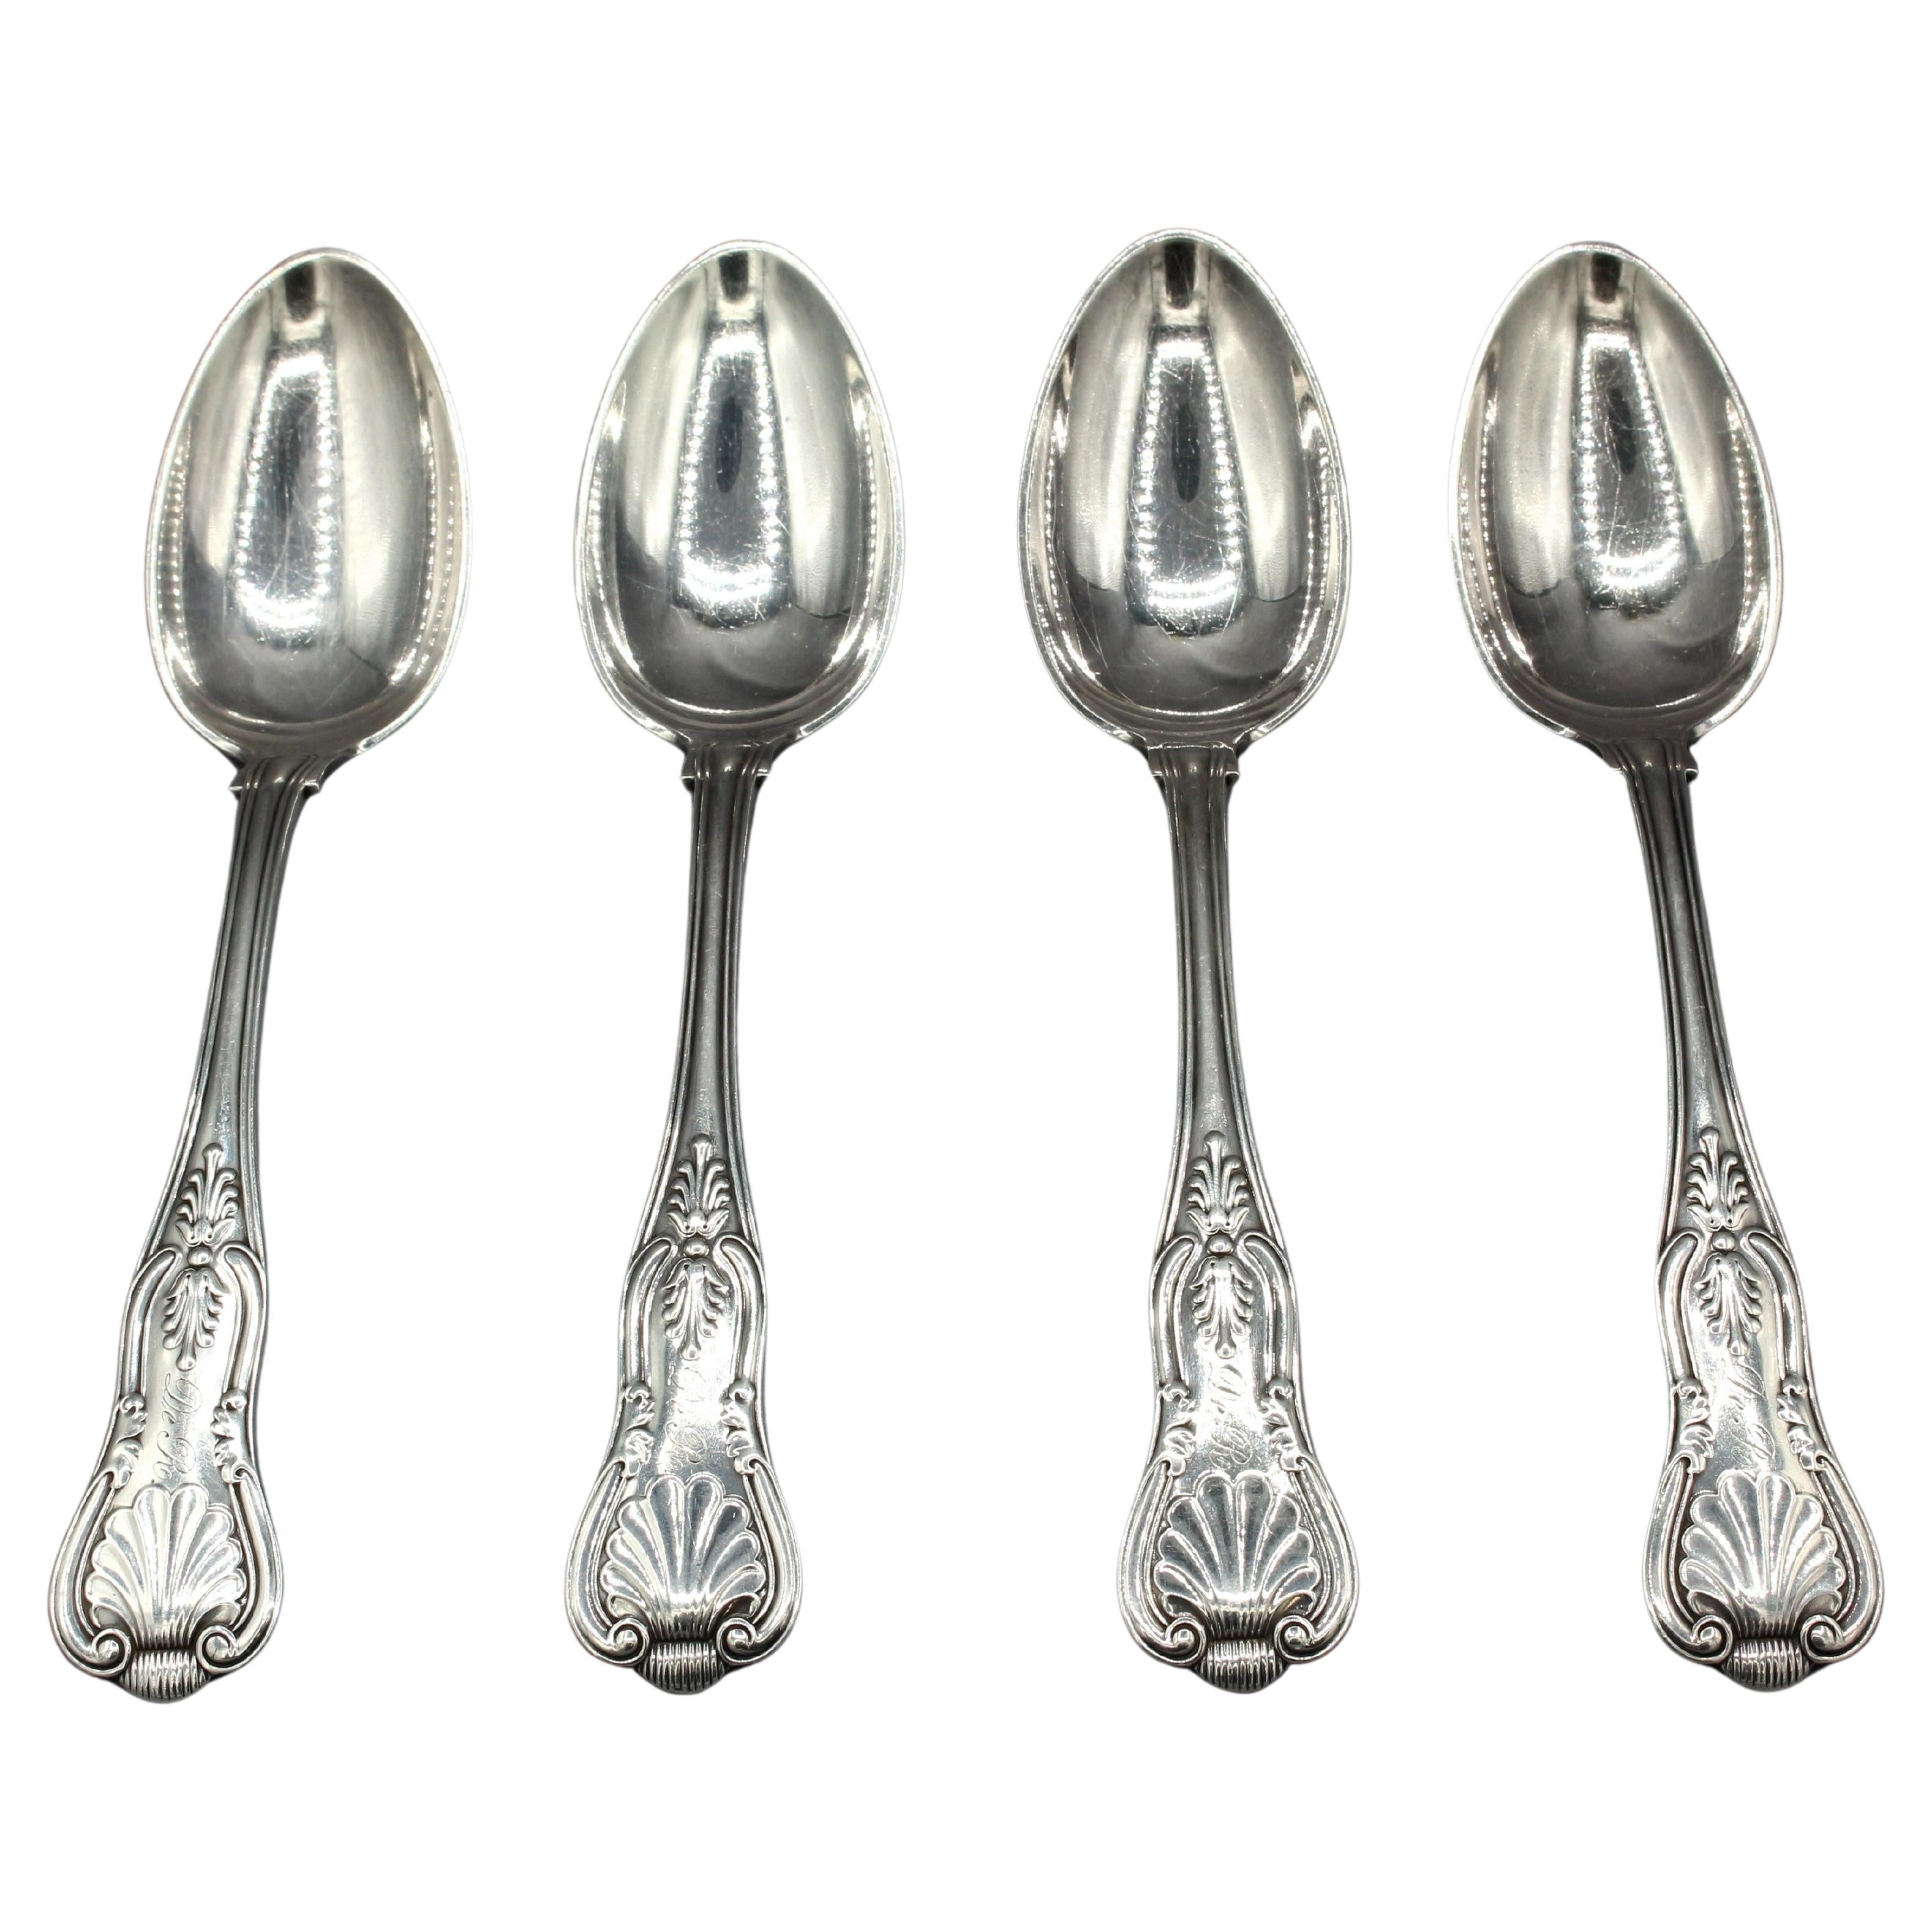 Circa 1900 Set of 4 Sterling Silver Serving Spoons in "Kings II" by Gorham